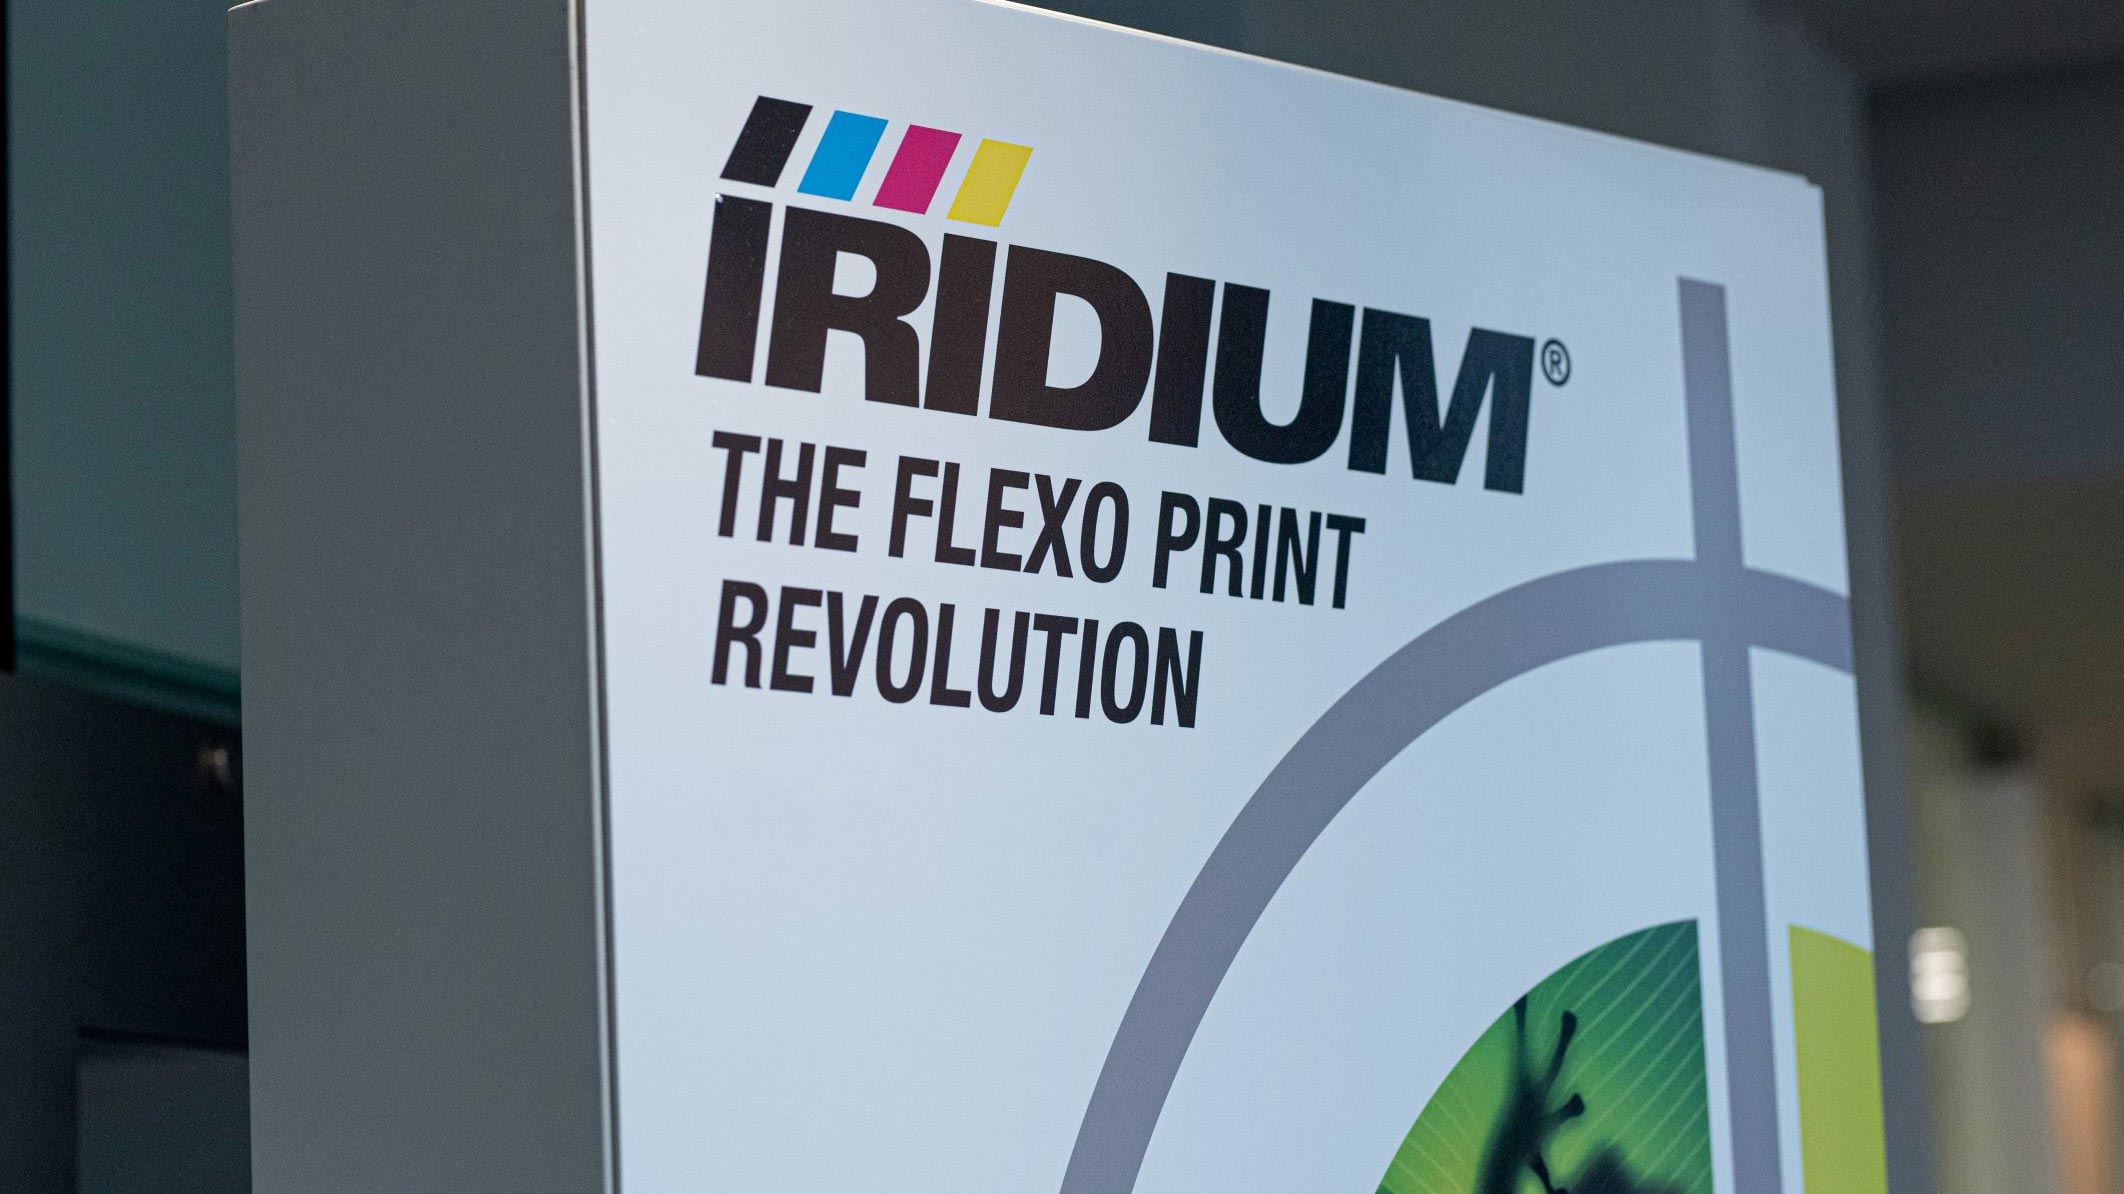 A.Celli - The best flexo printing machine